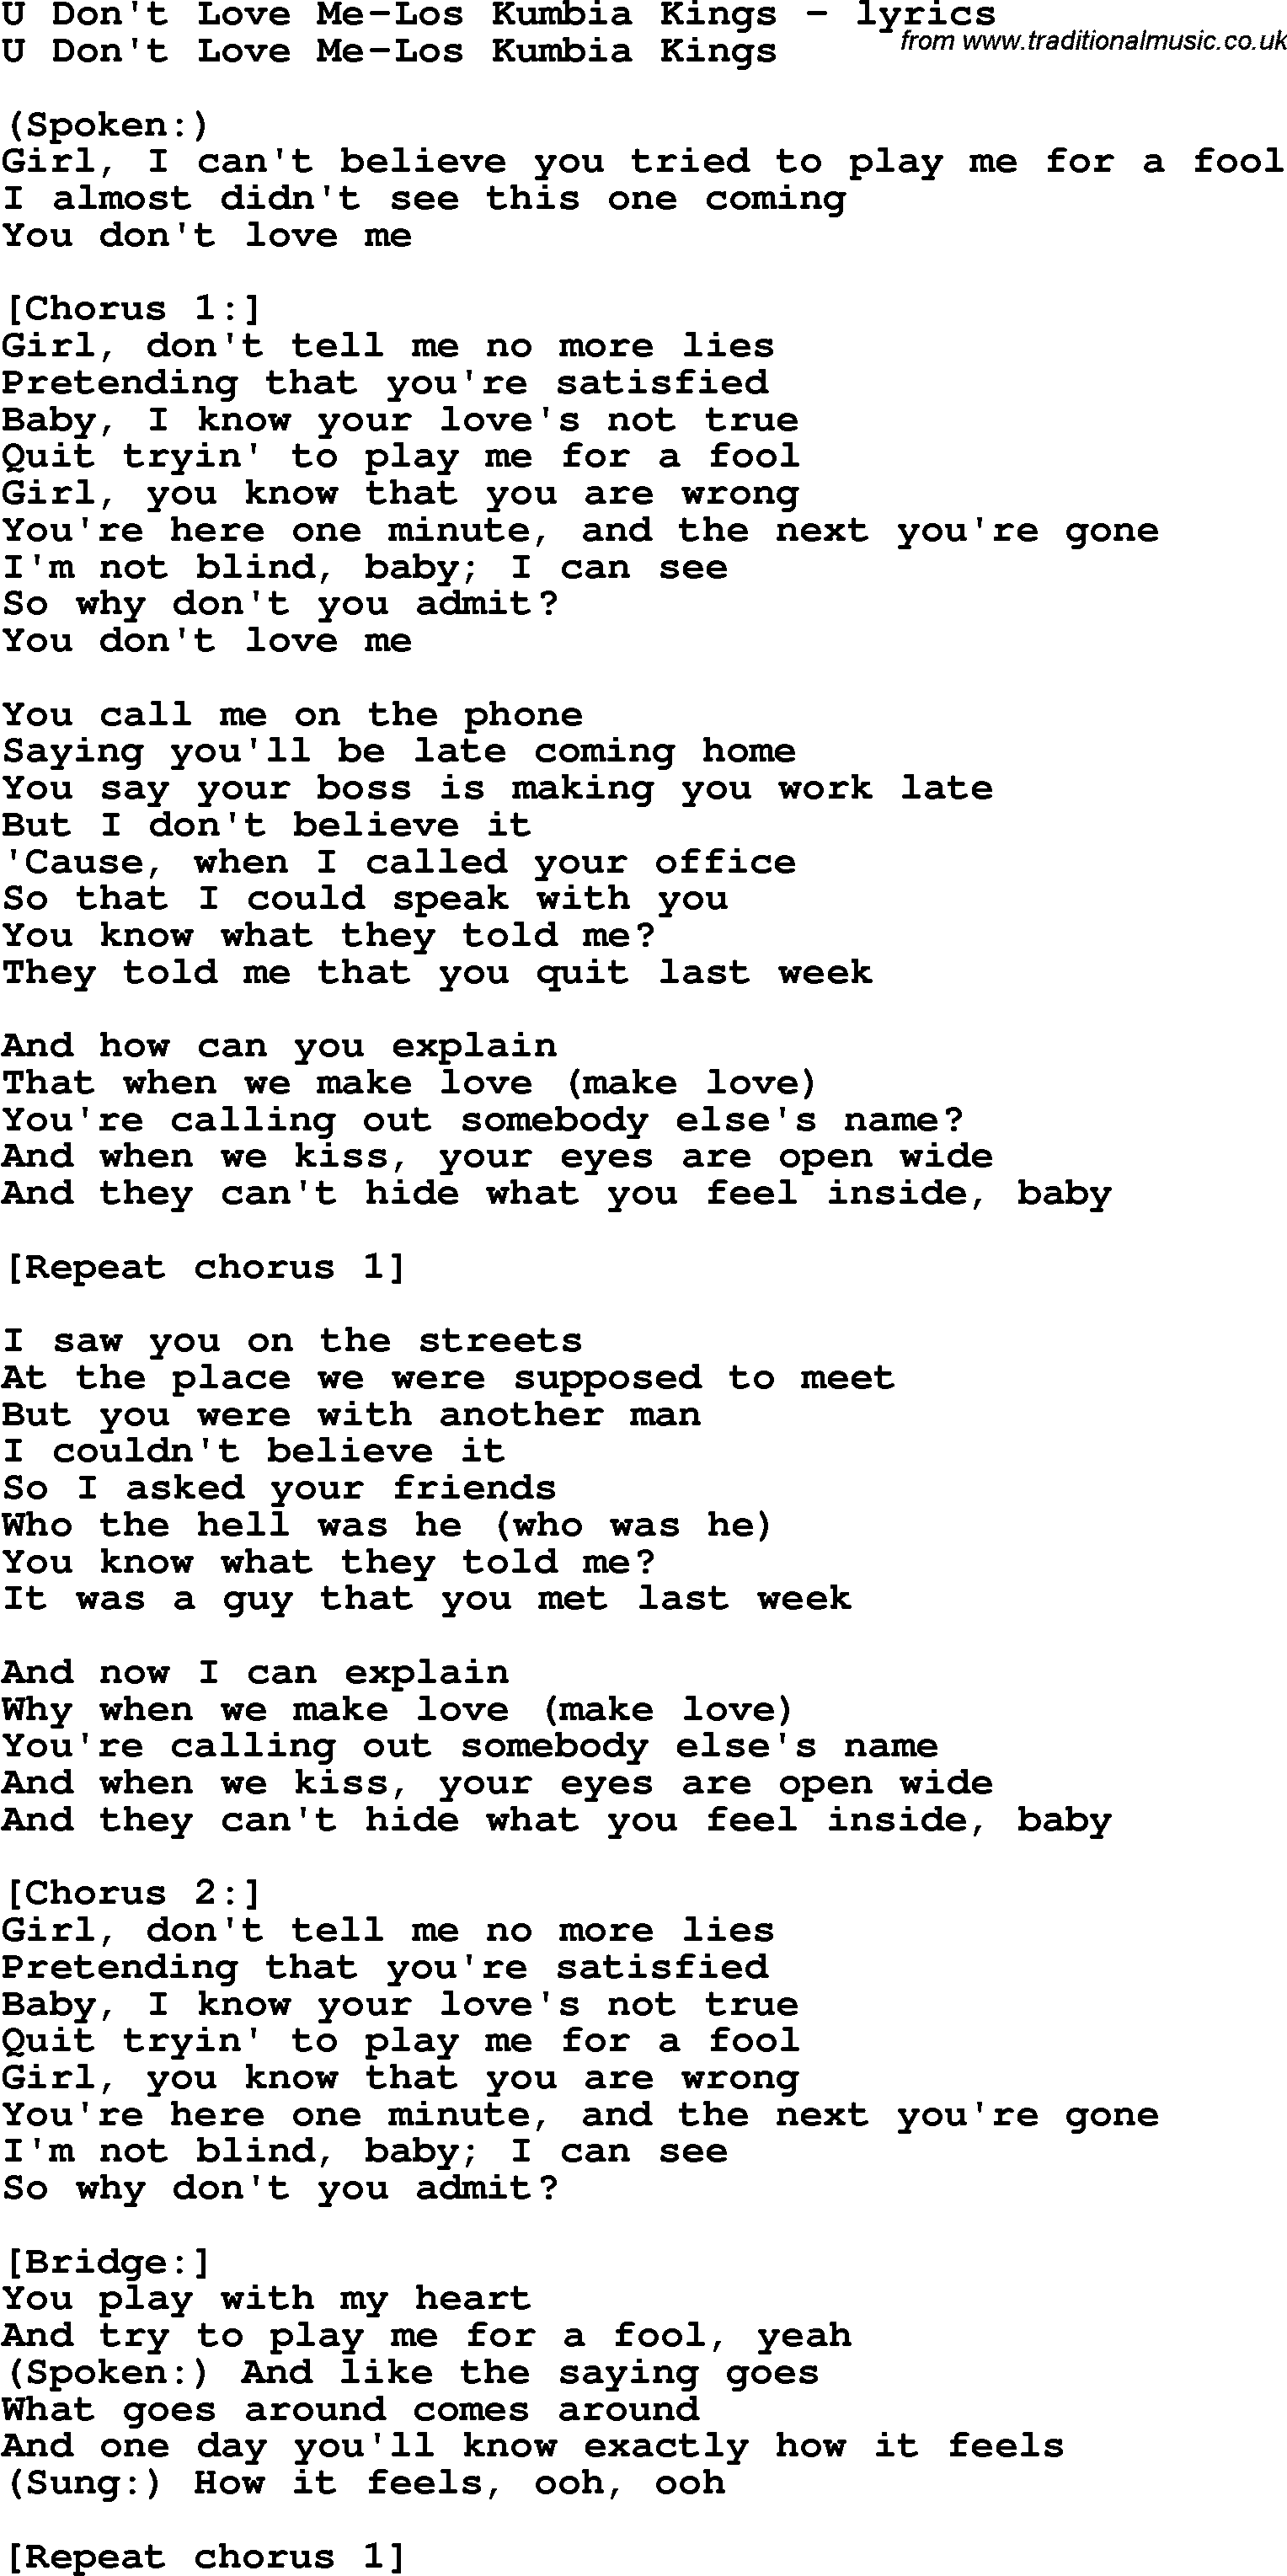 Love Song Lyrics for: U Don't Love Me-Los Kumbia Kings